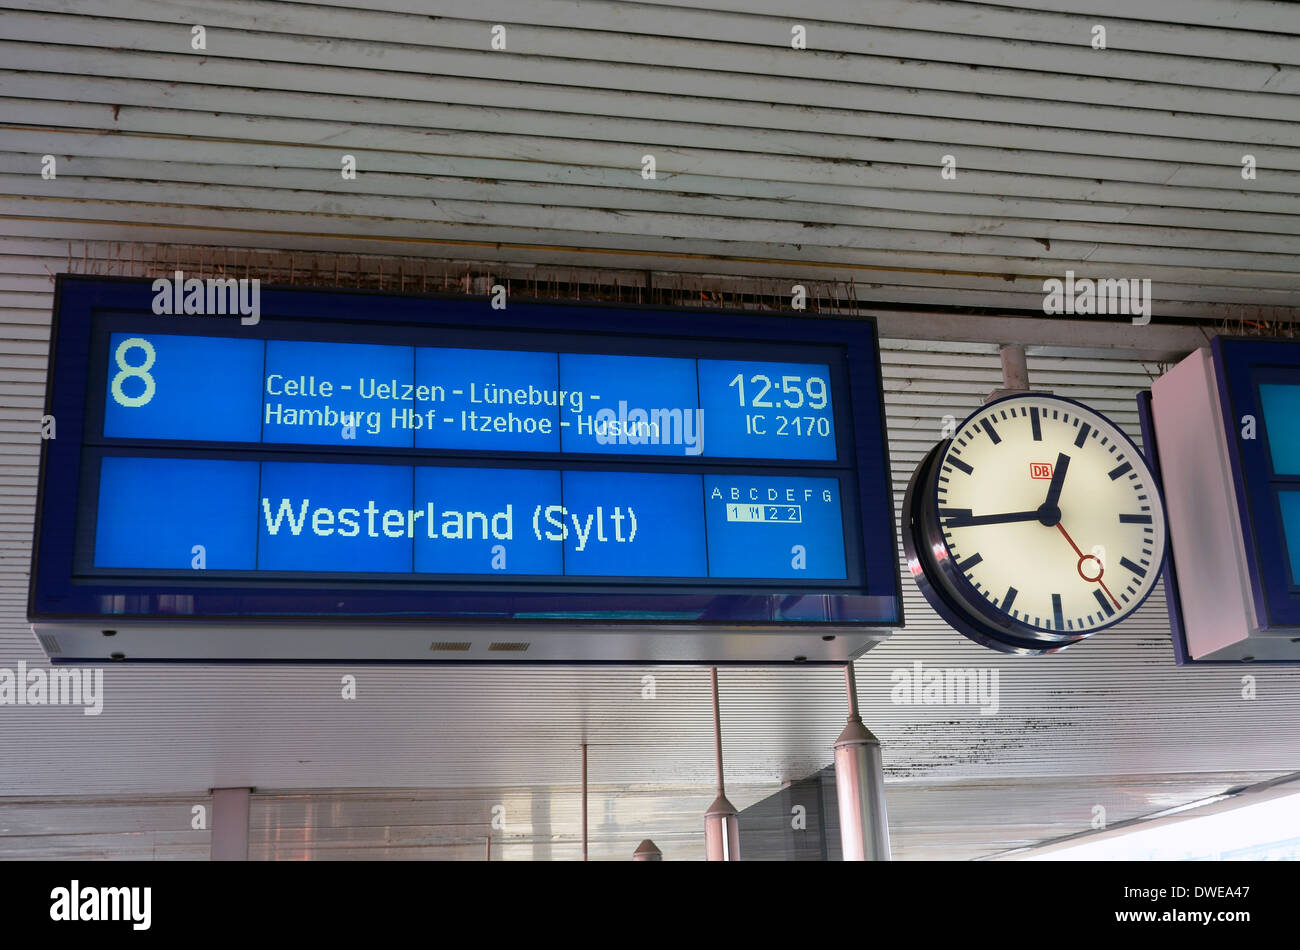 Stazione scheda di partenza che mostra il prossimo treno per Westerland. Bahnhof Abflugtafel zeigt nächste Zug nach Westerland. Foto Stock